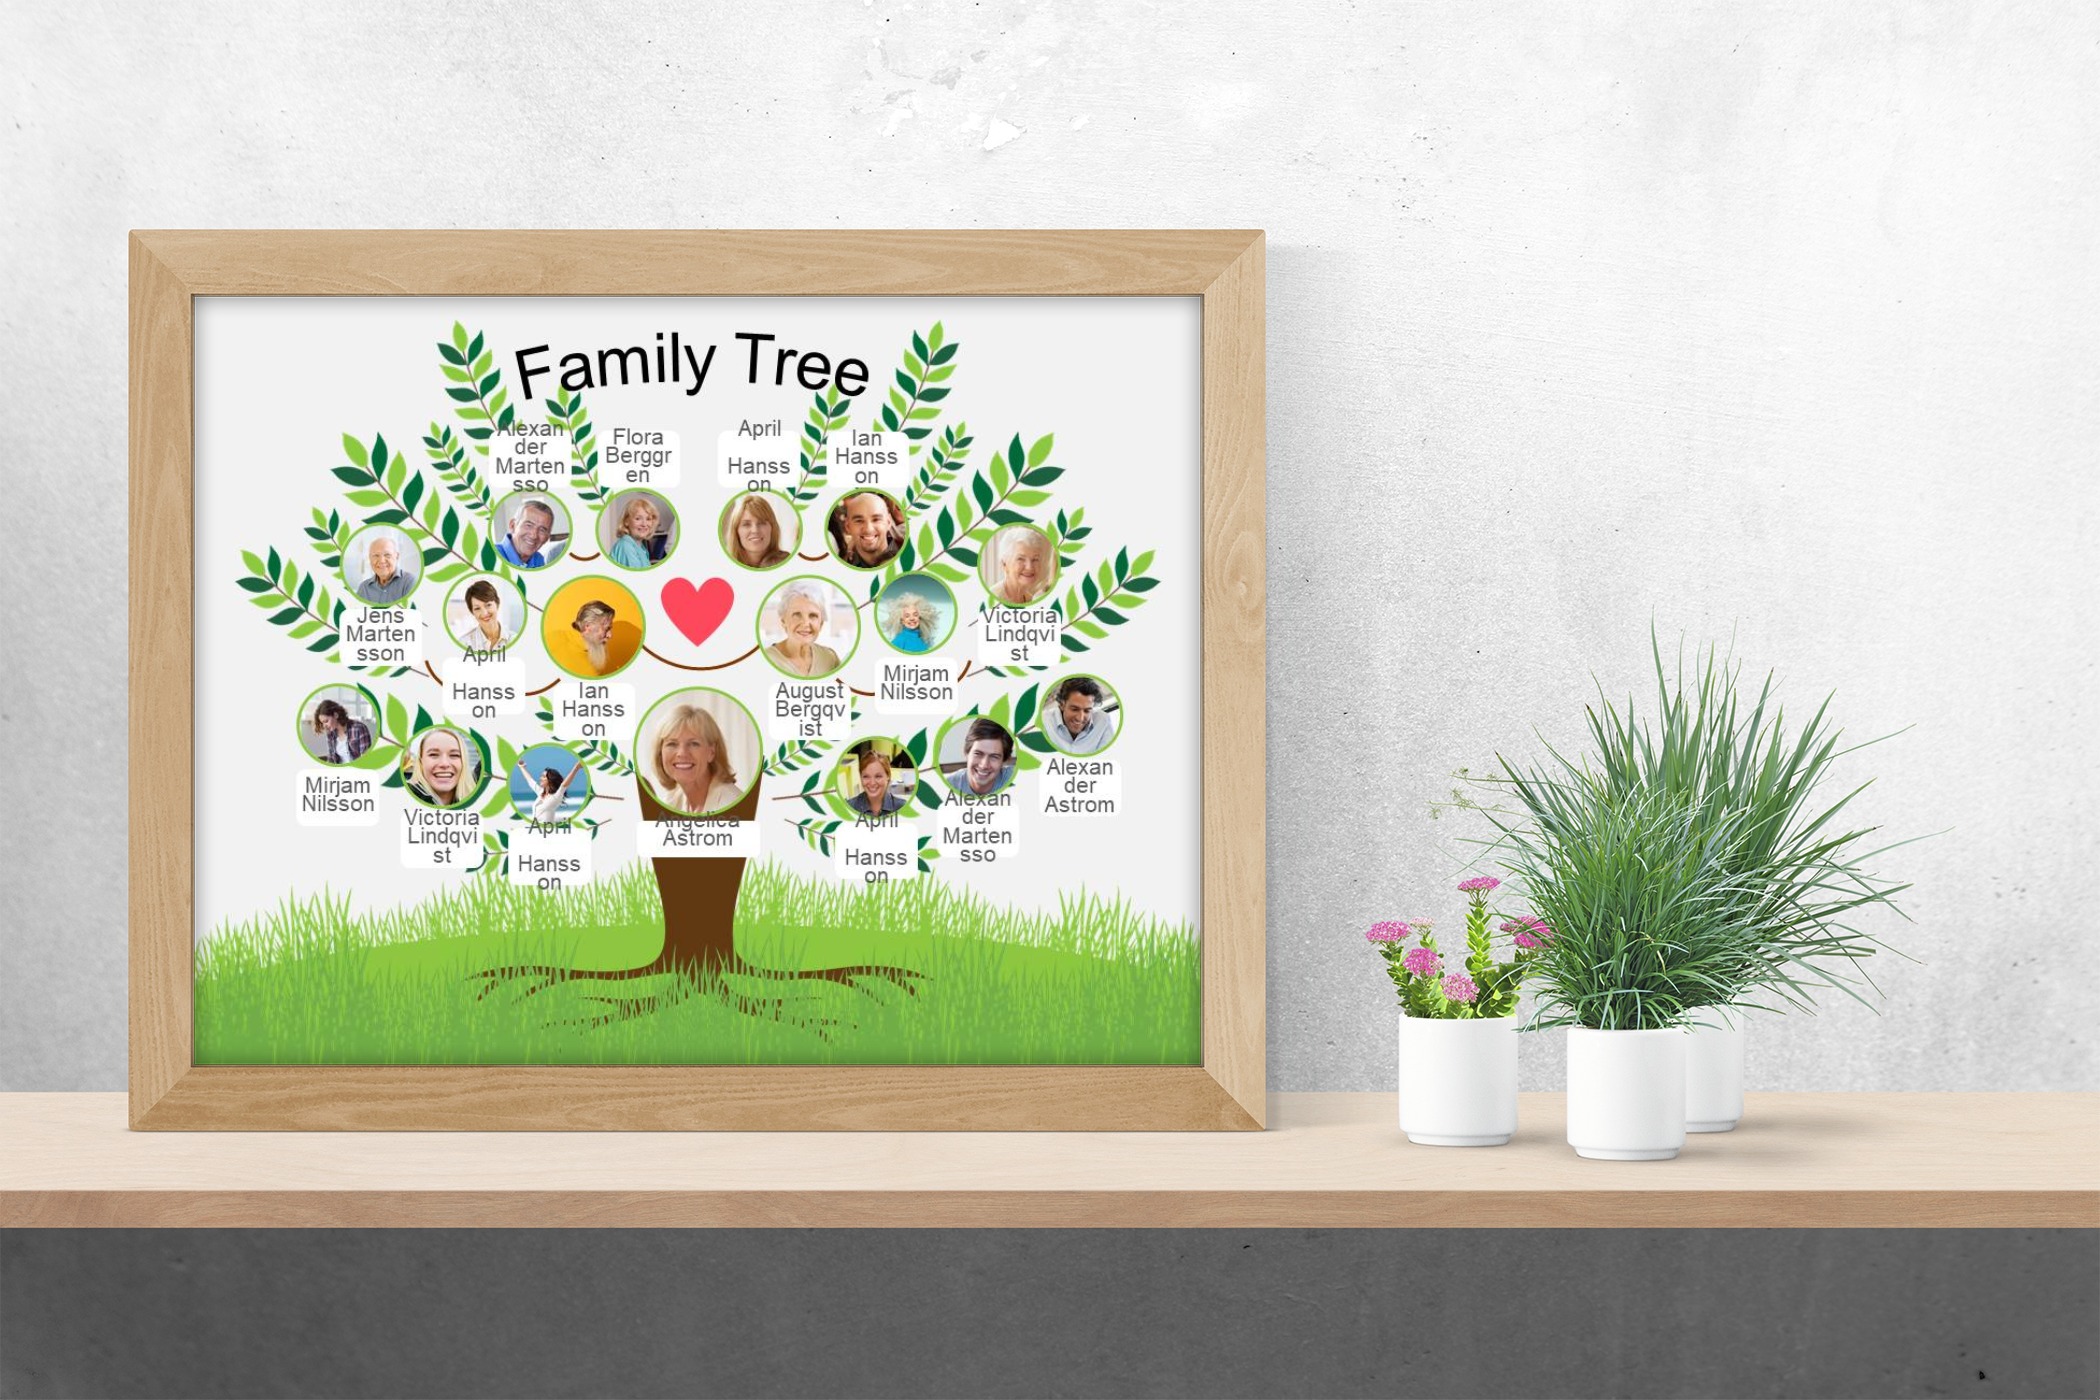 Family Tree Template Google Slides